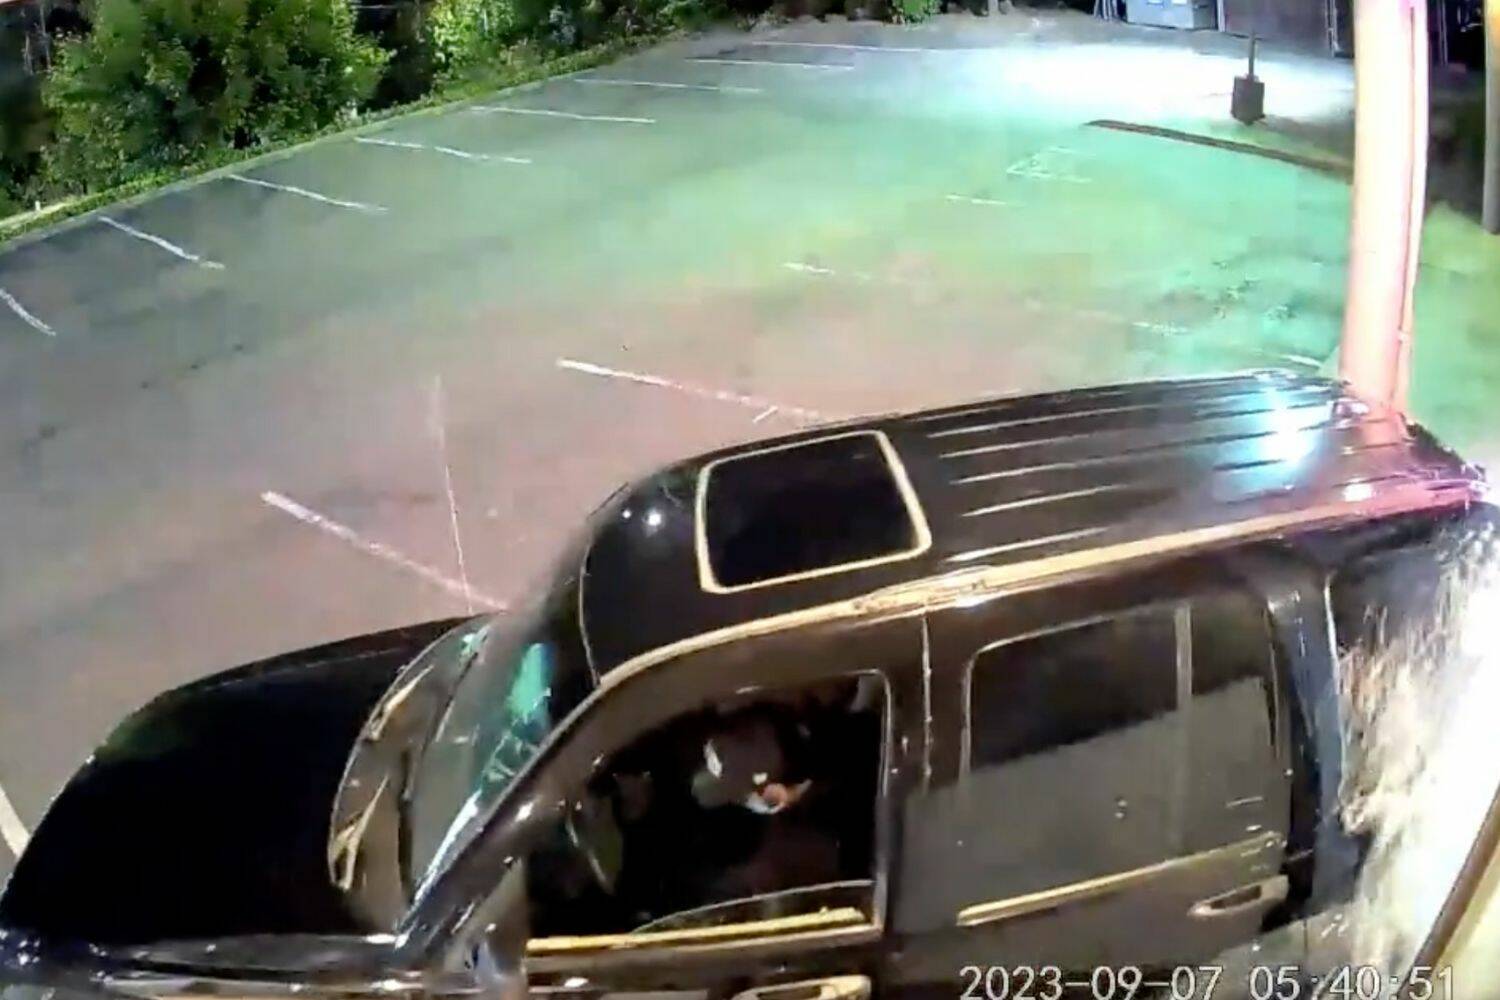 Courtesy of RPD
Surveillance footage of suspected smash-and-grab burglar.